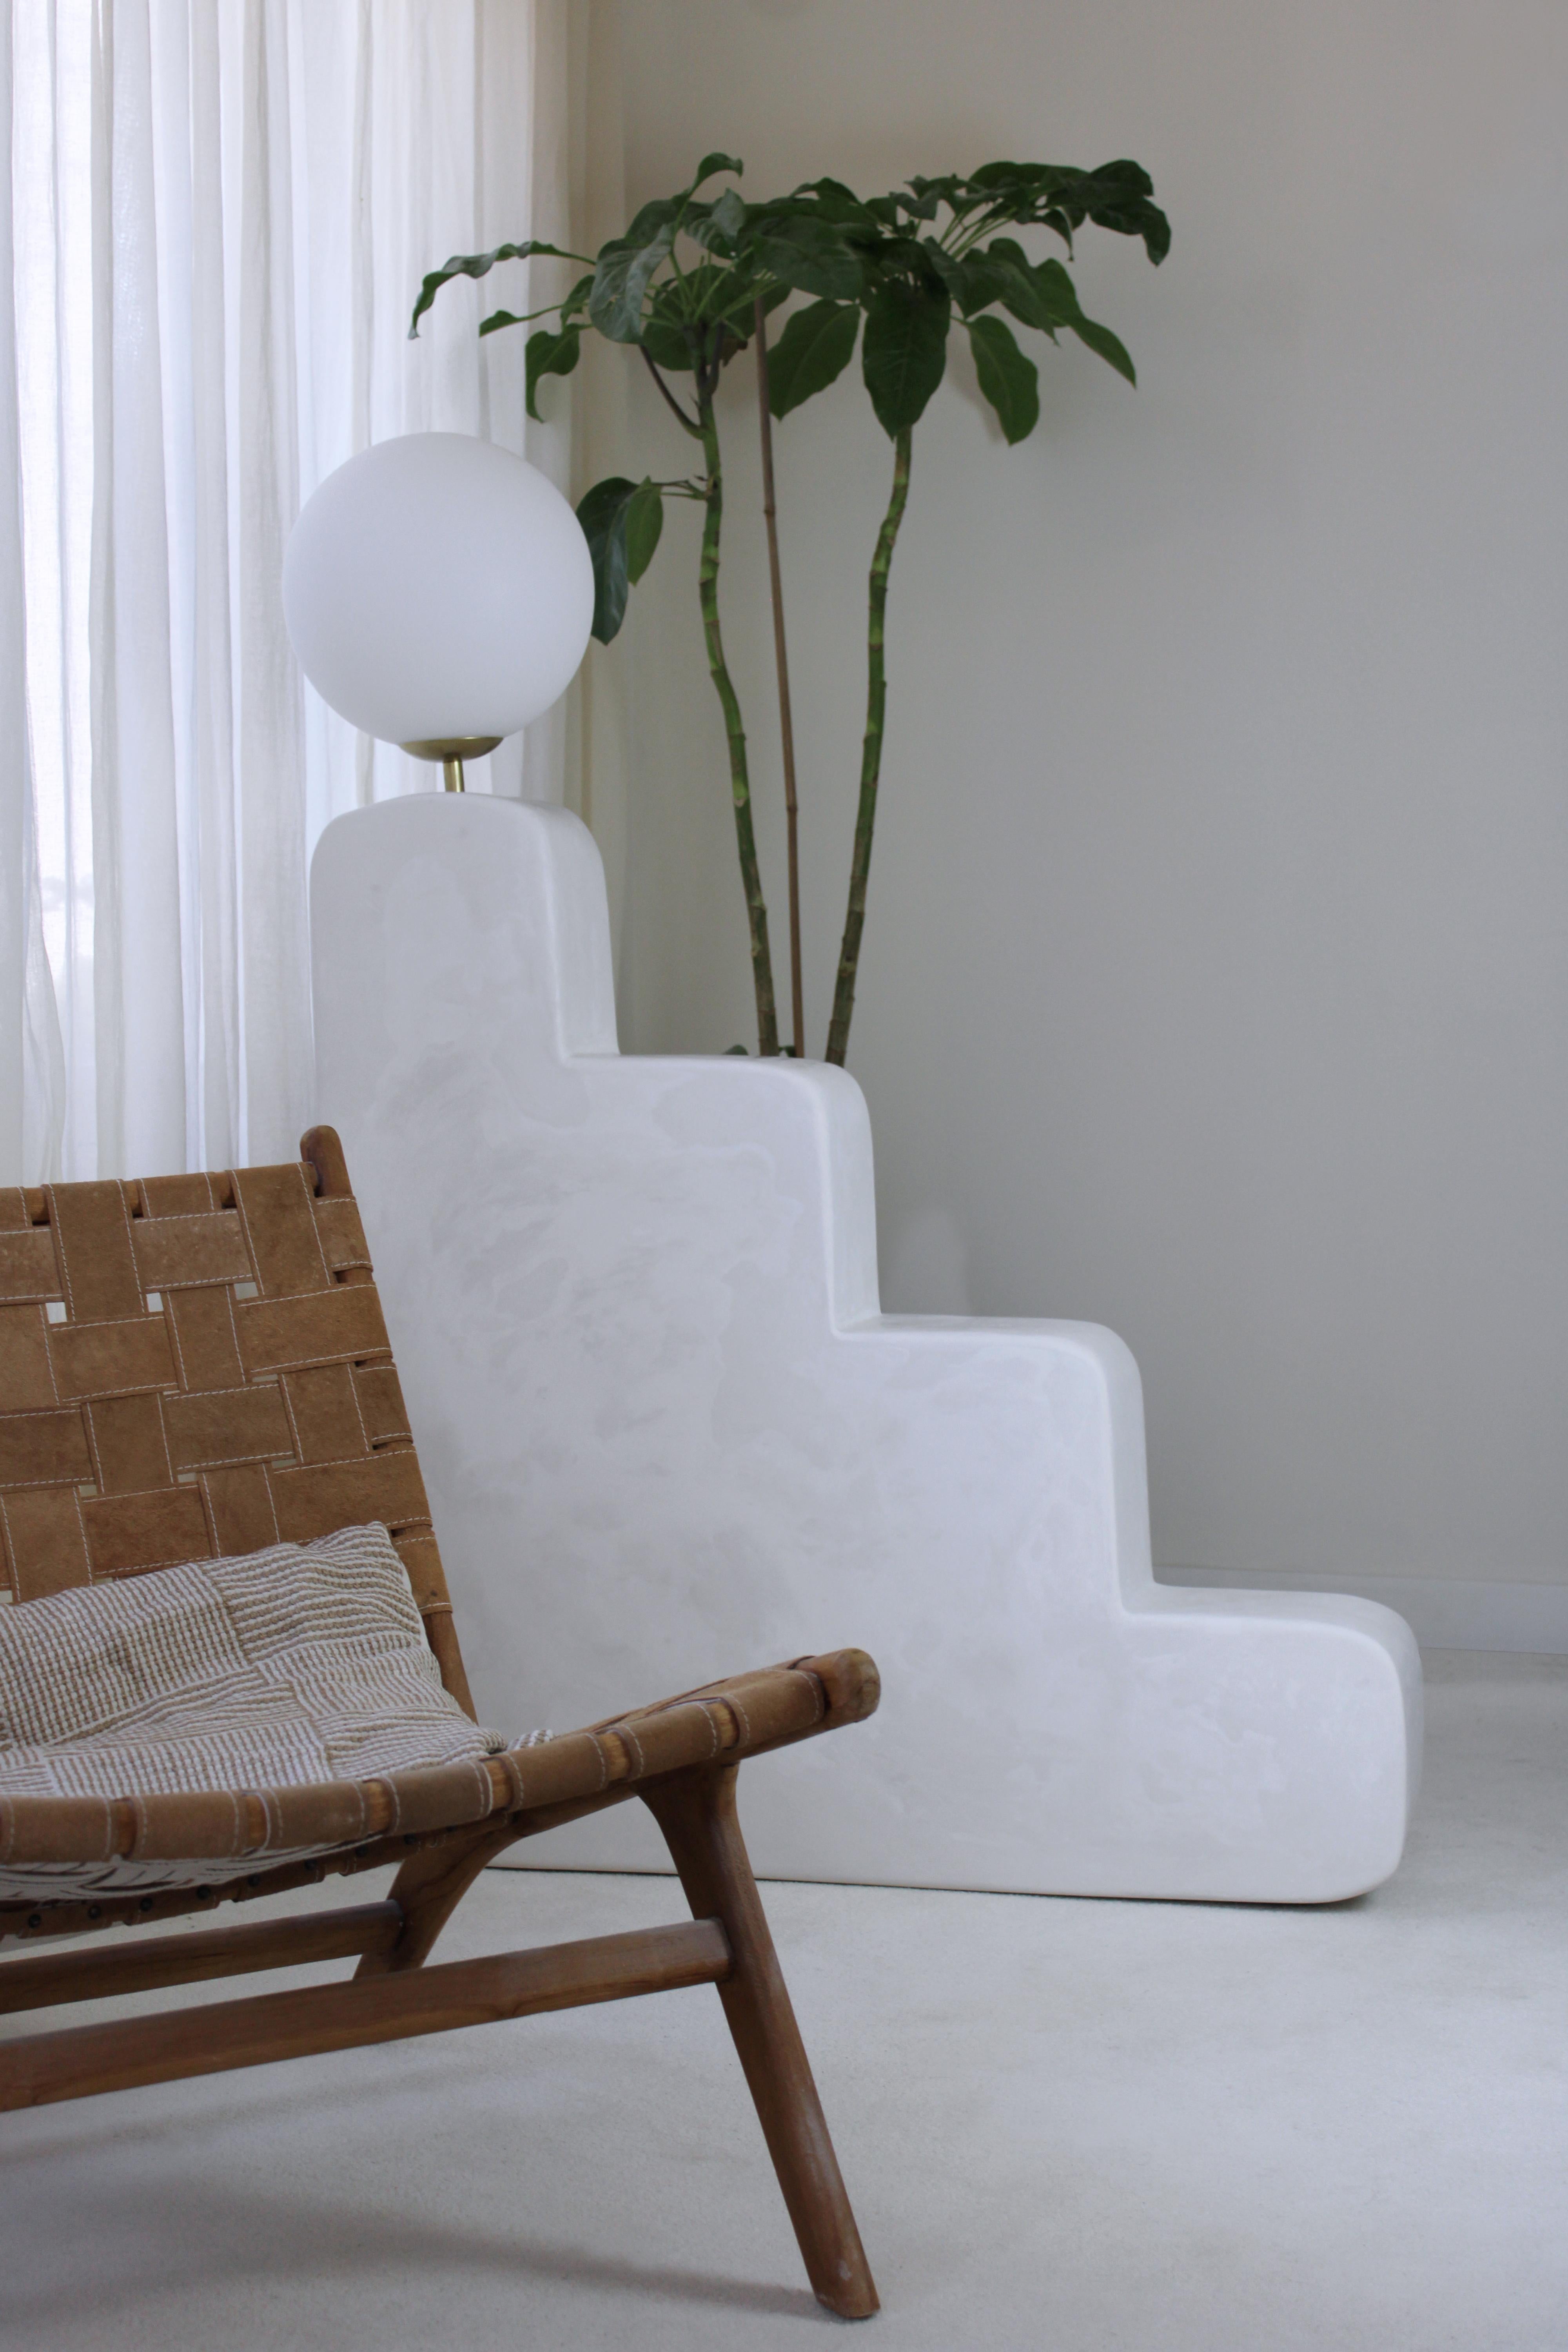 Organic Modern Contemporary Floor Lamp in Gypsum / Collectible Design 